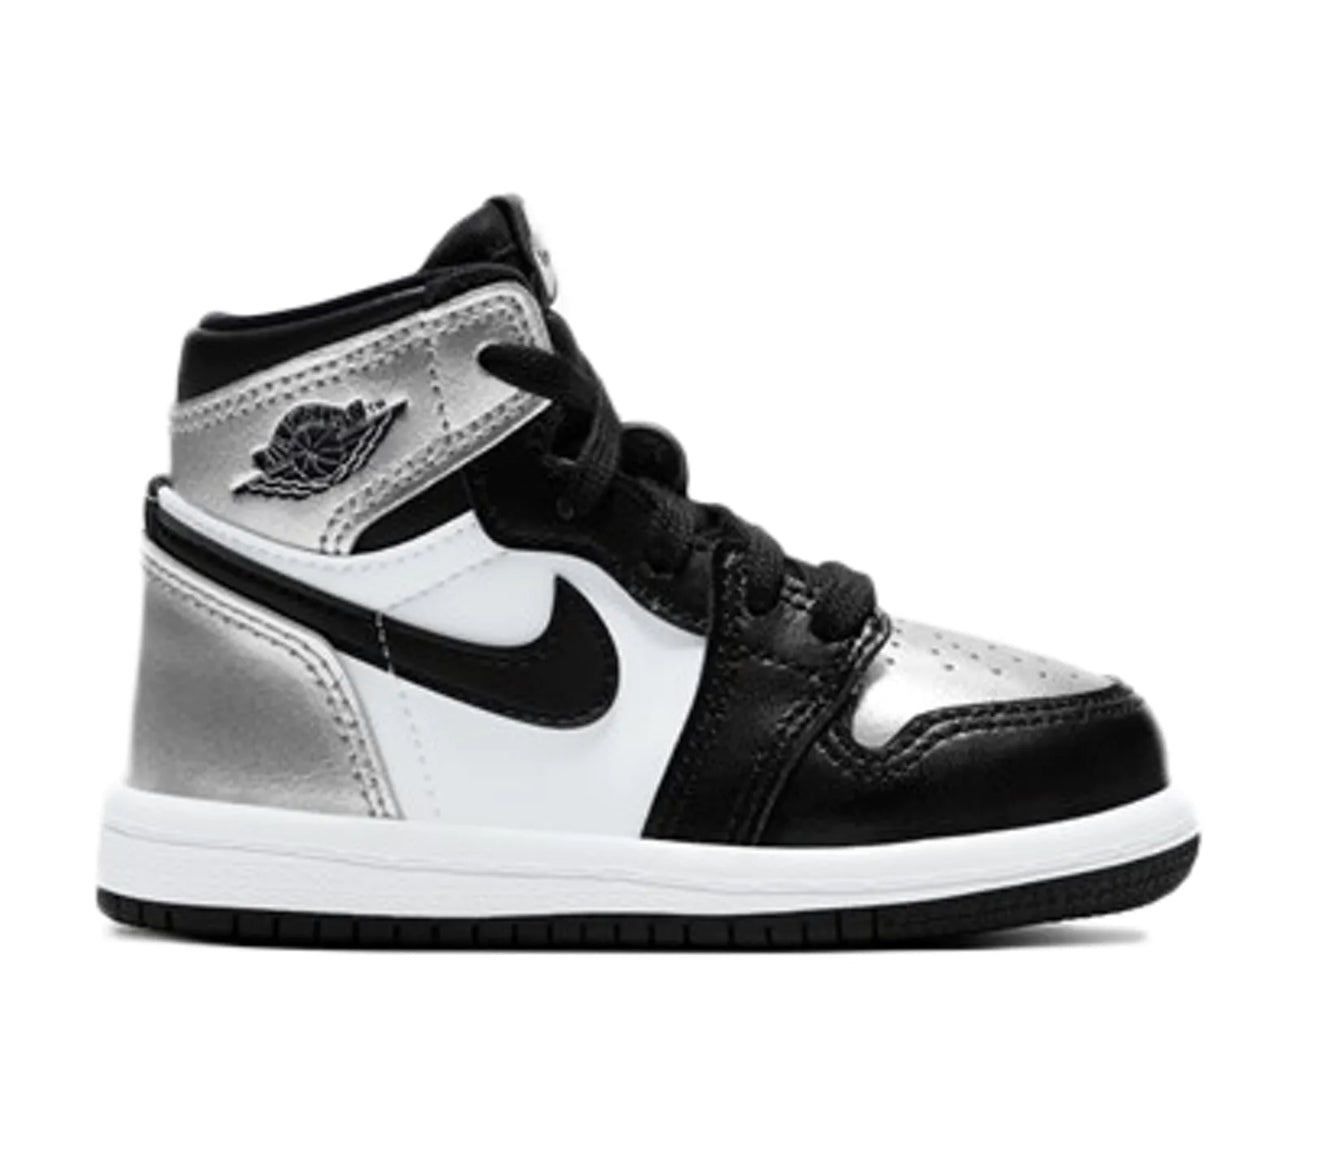 Jordan 1 Retro High “Silver Toe” (TD)